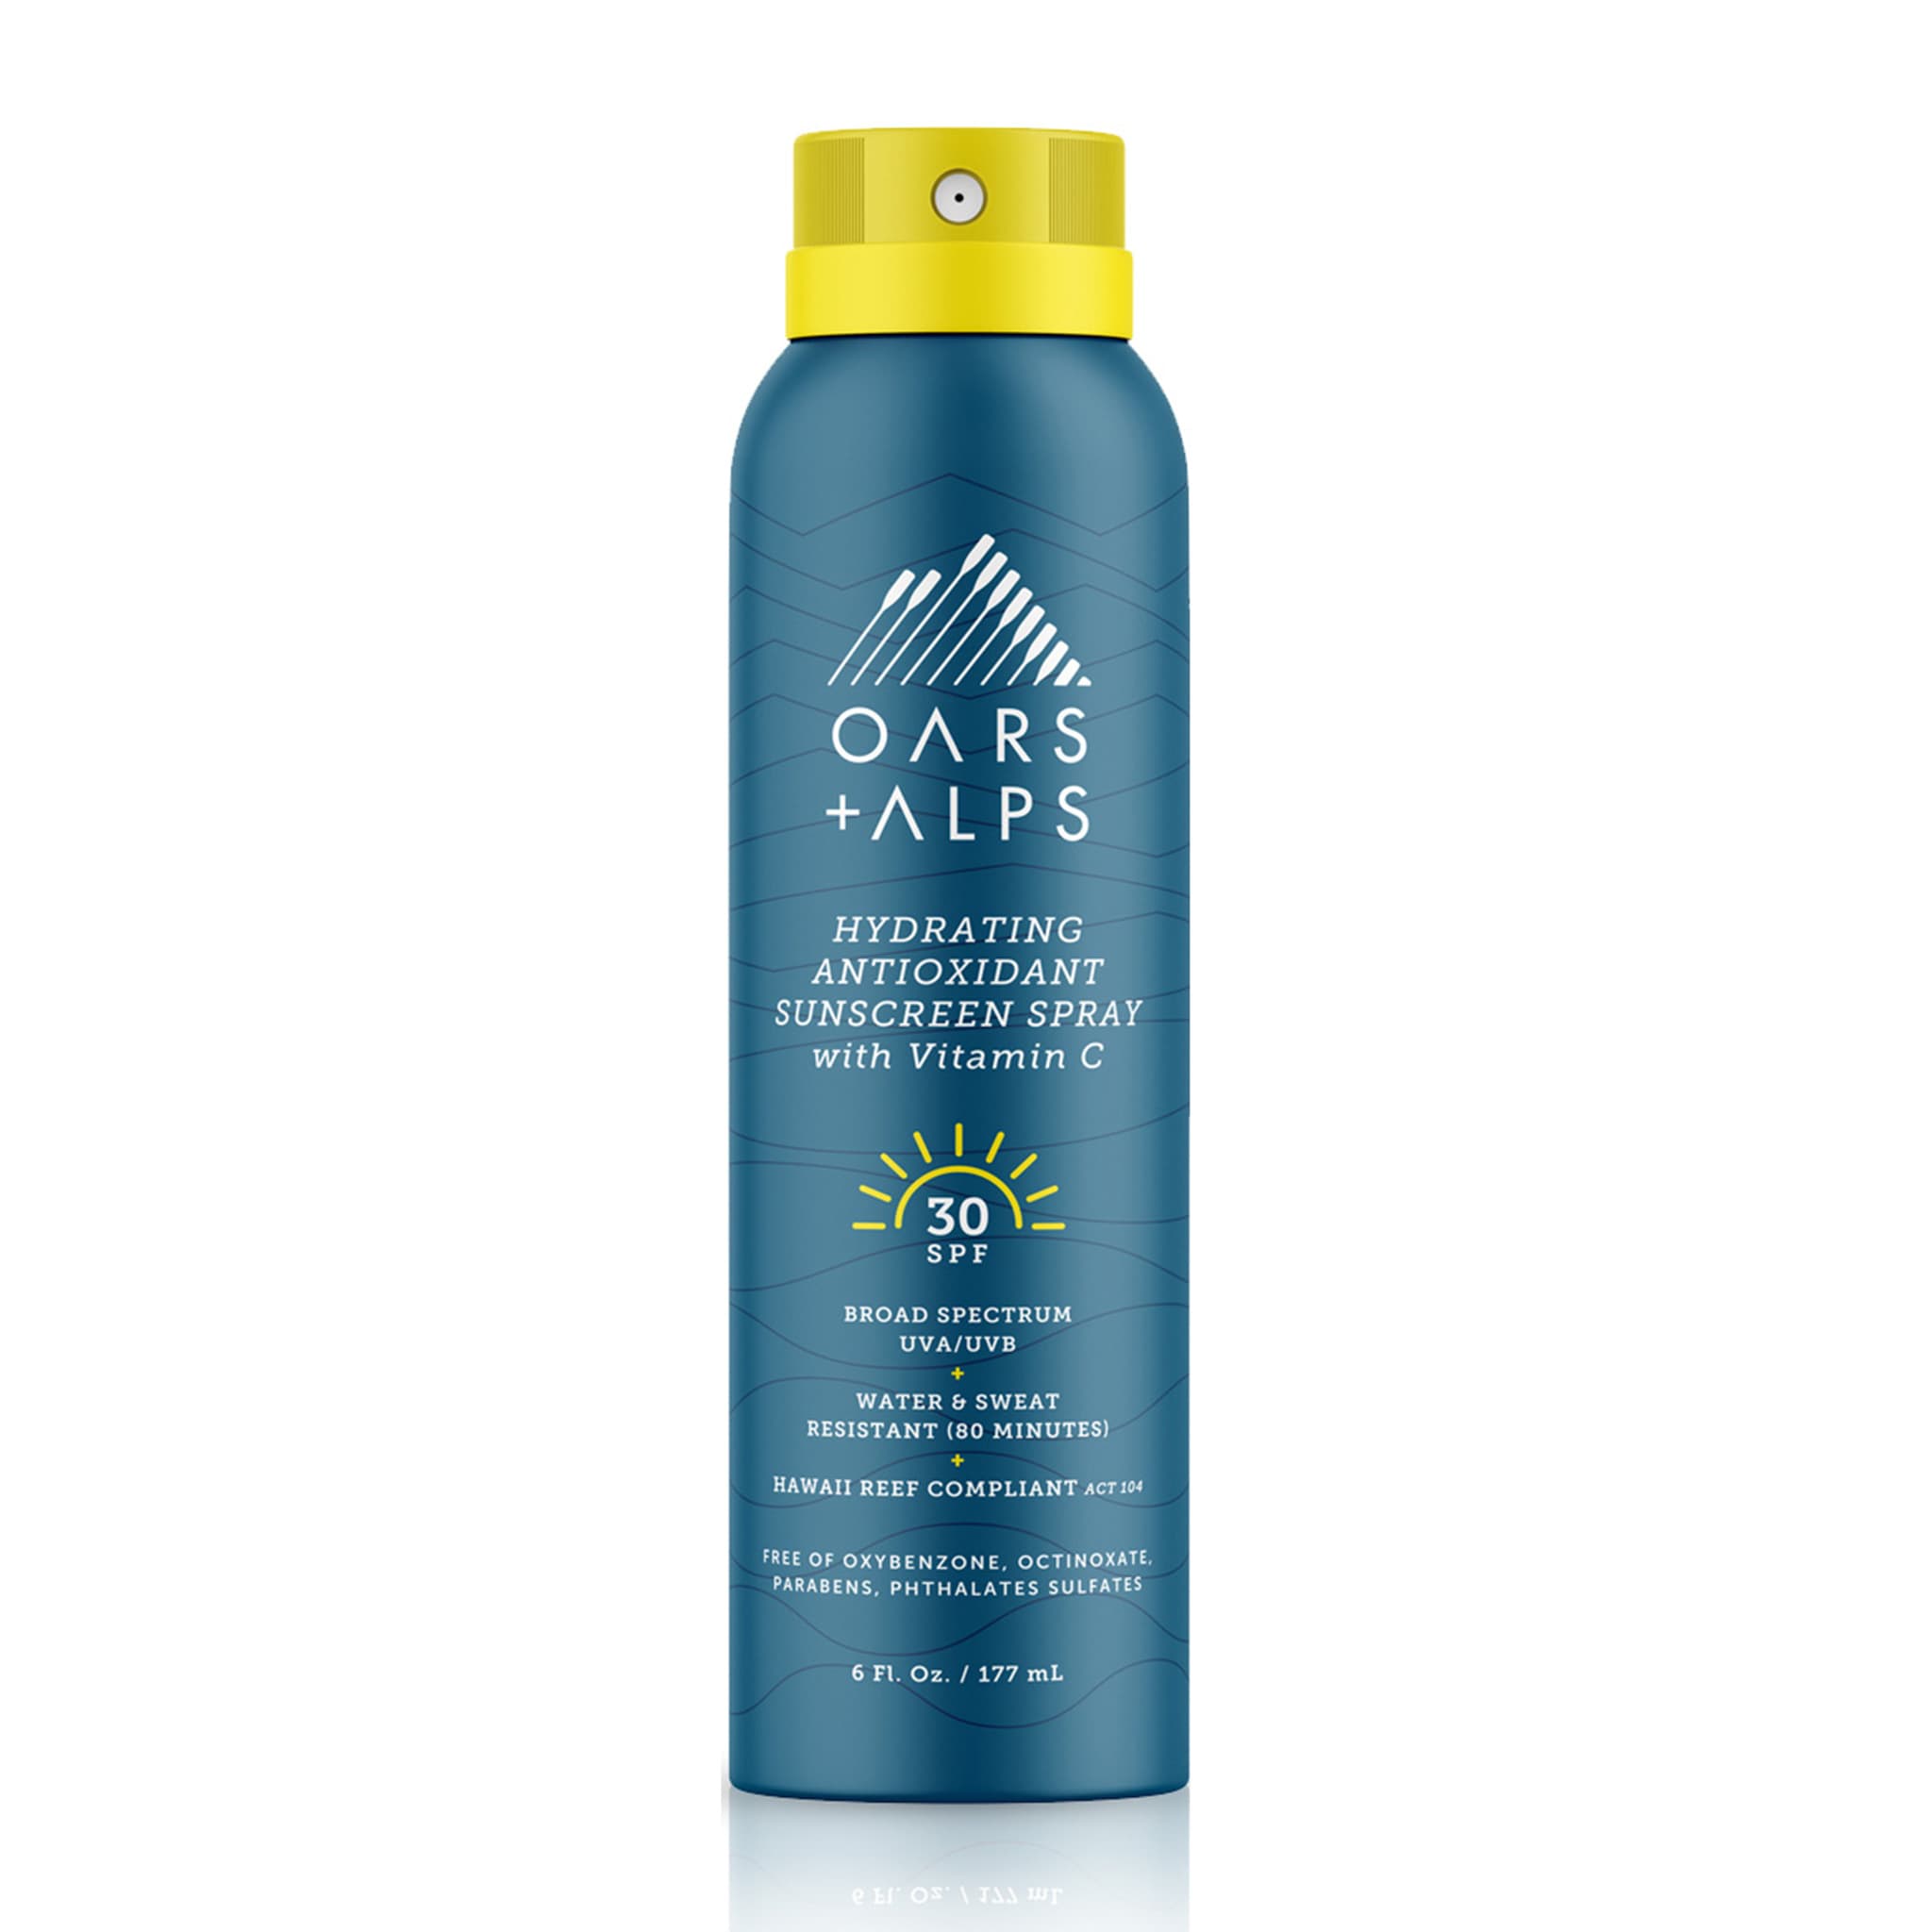 hydrating antioxidant sunscreen spray with vitamin C SPF 30